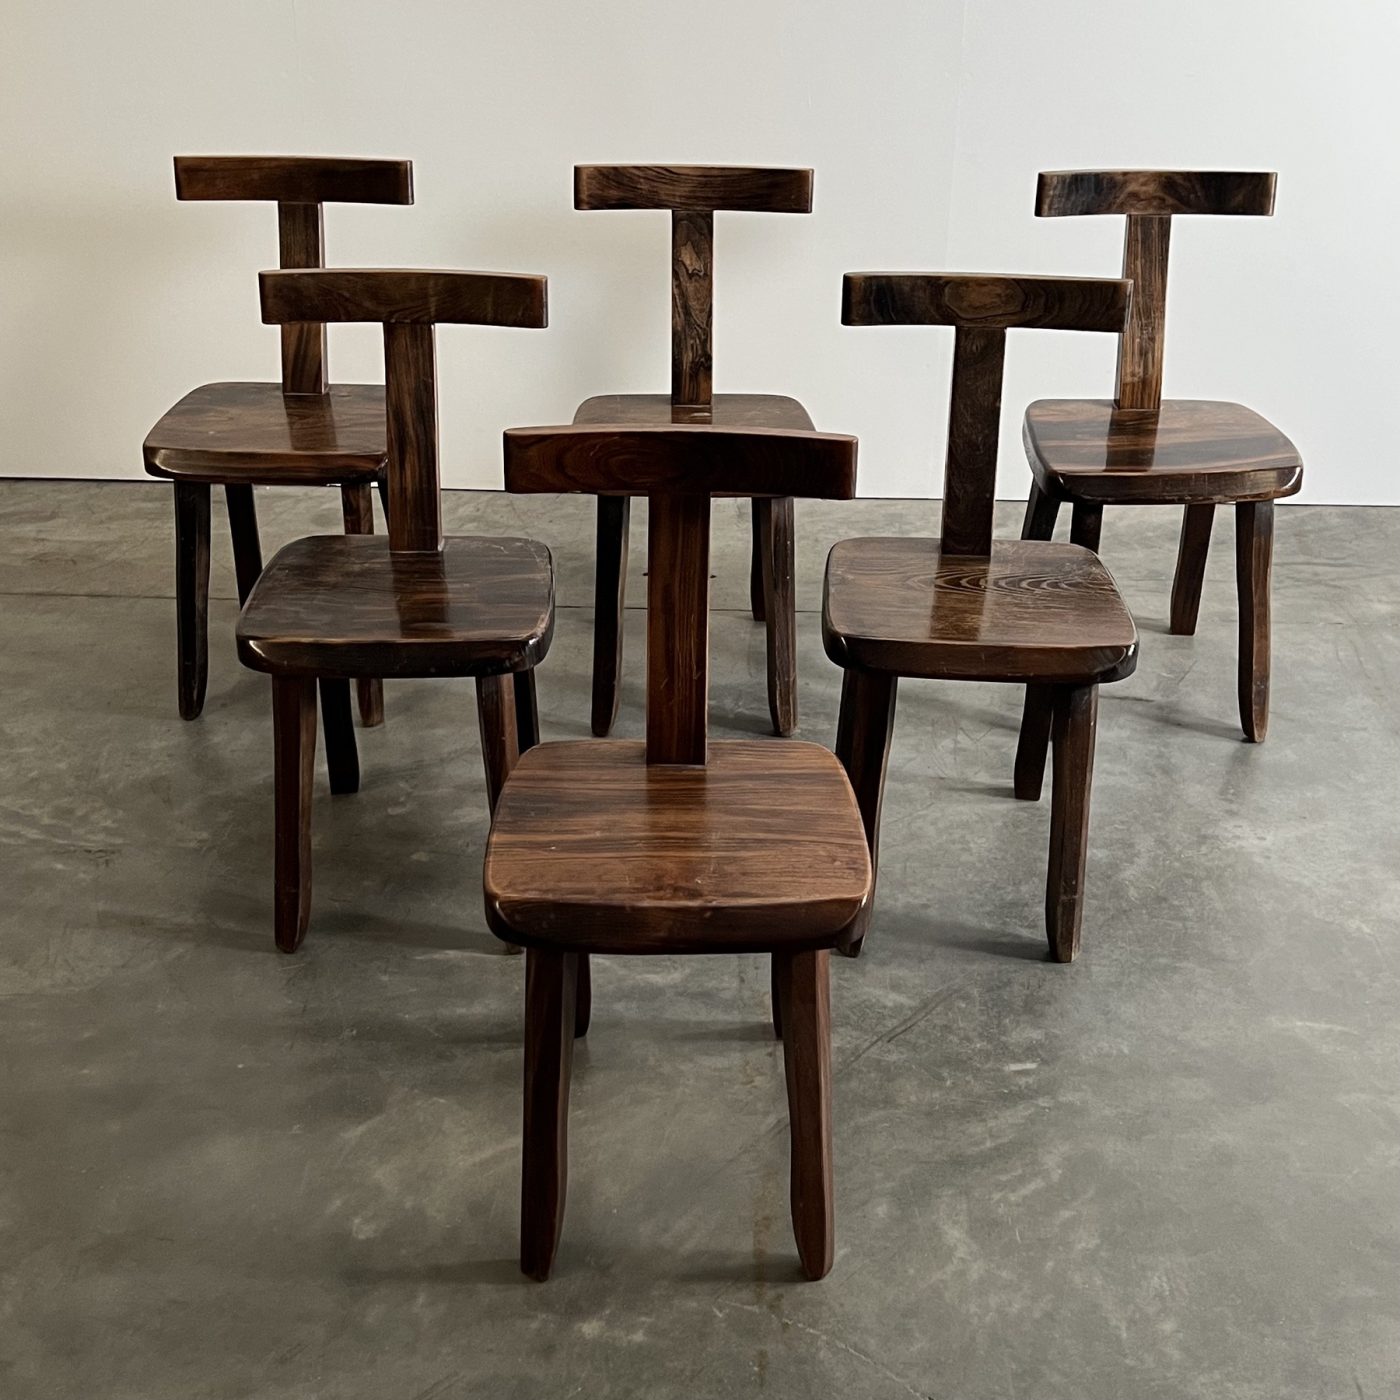 objet-hanninen-chairs0003